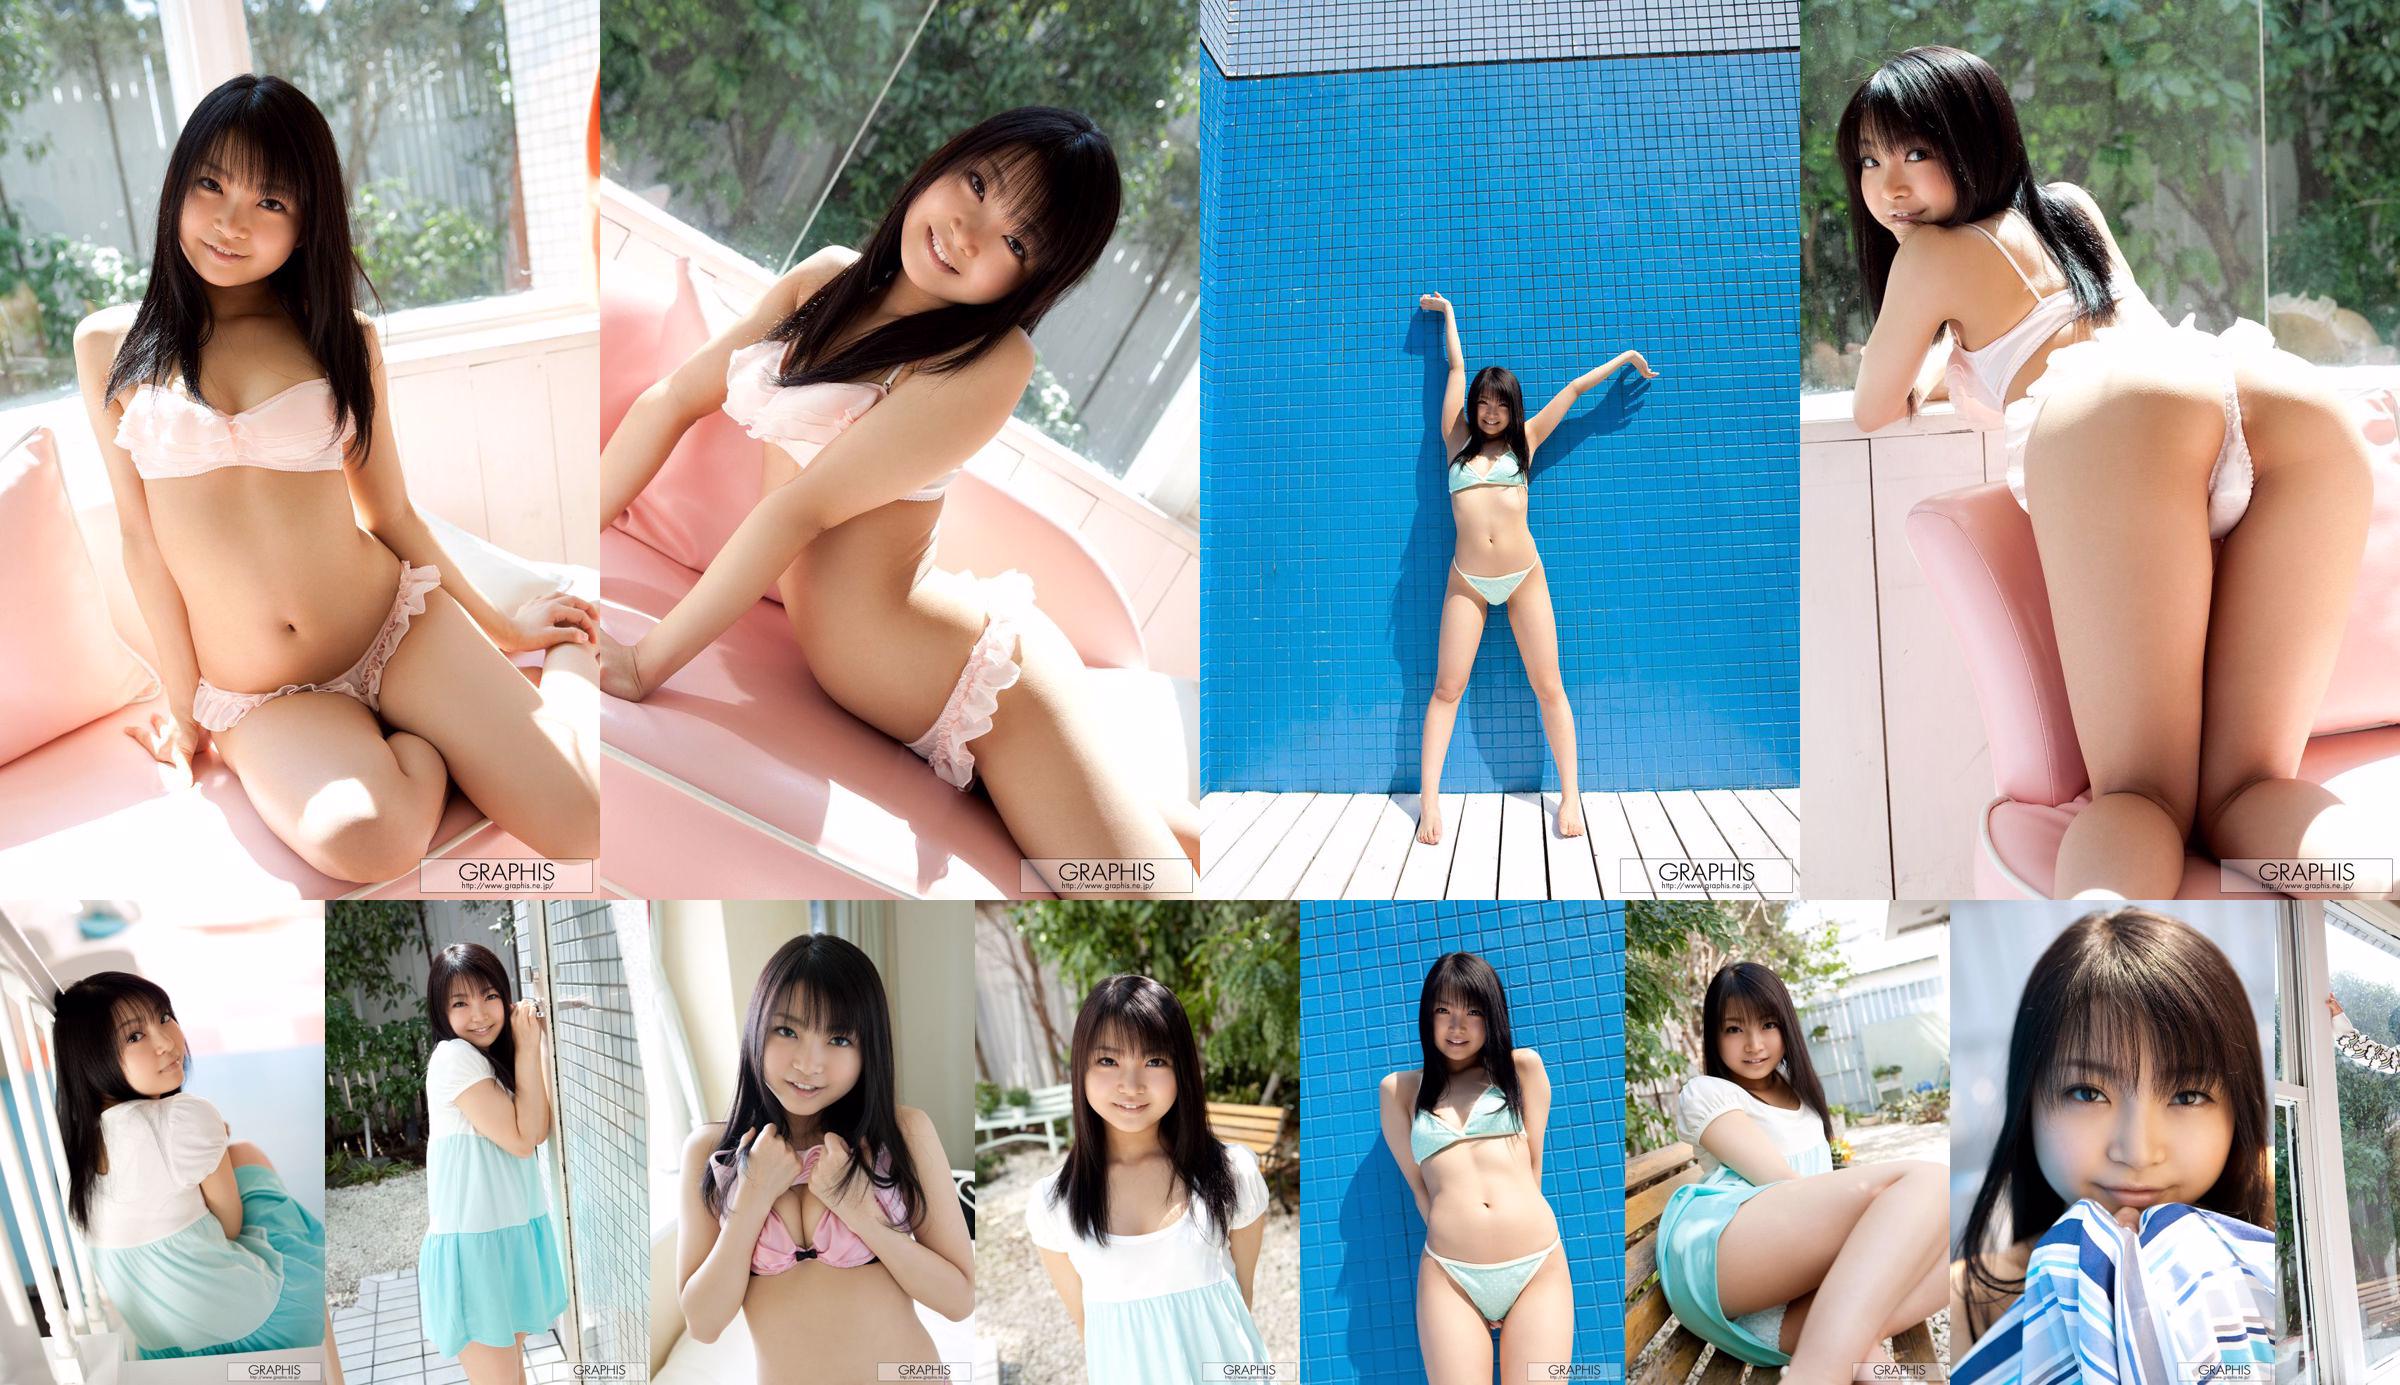 Chihiro Aoi / Chihiro Aoi [Graphis] Primera fotograbado Primera hija No.f09052 Página 7